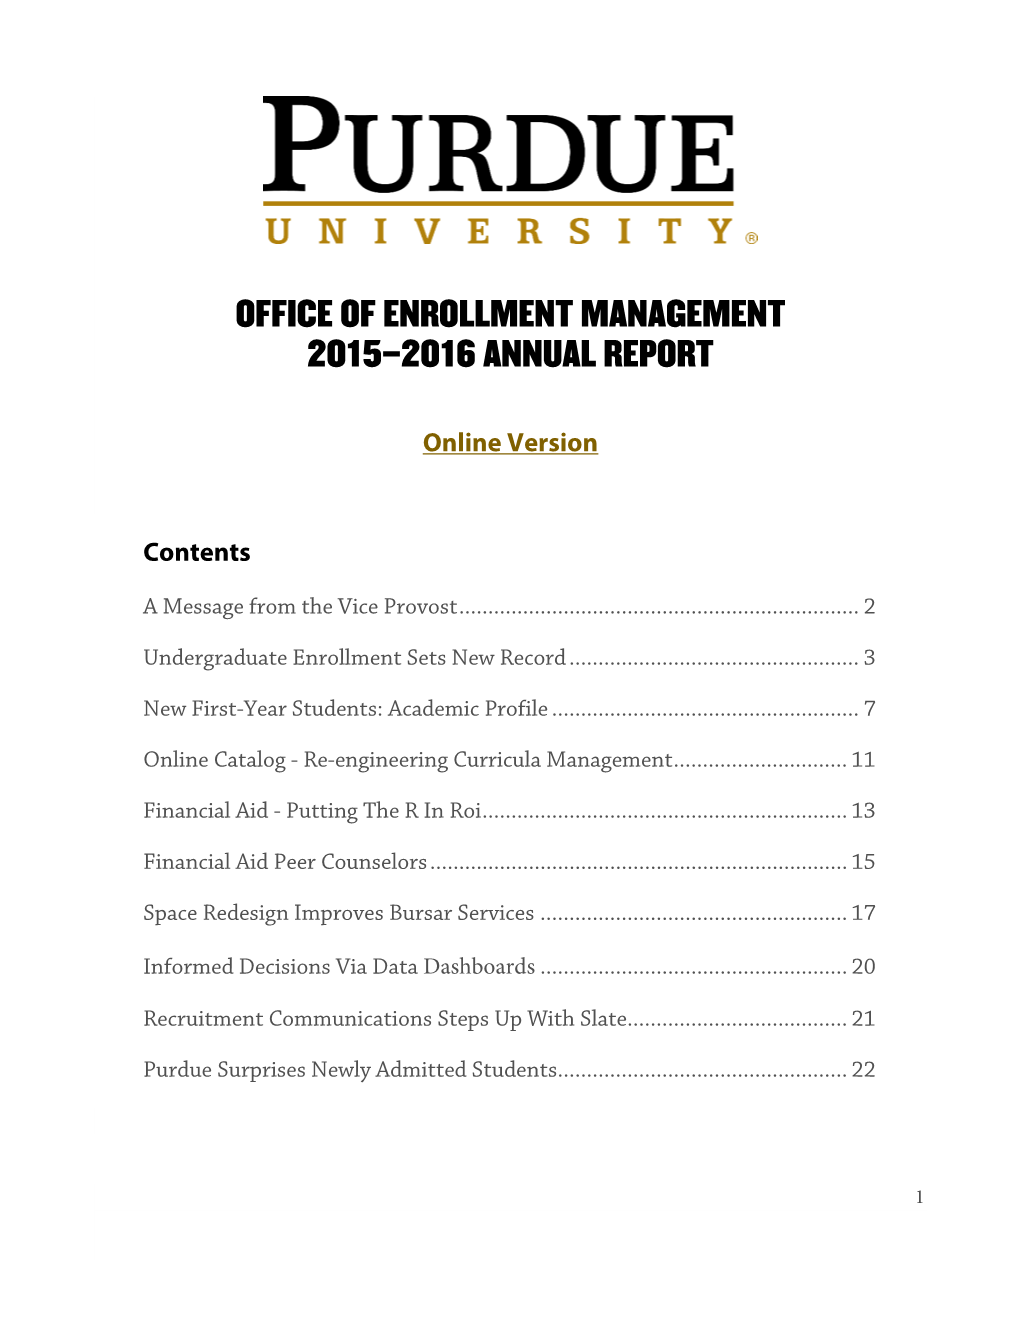 2015-2016 Enrollment Management Annual Report